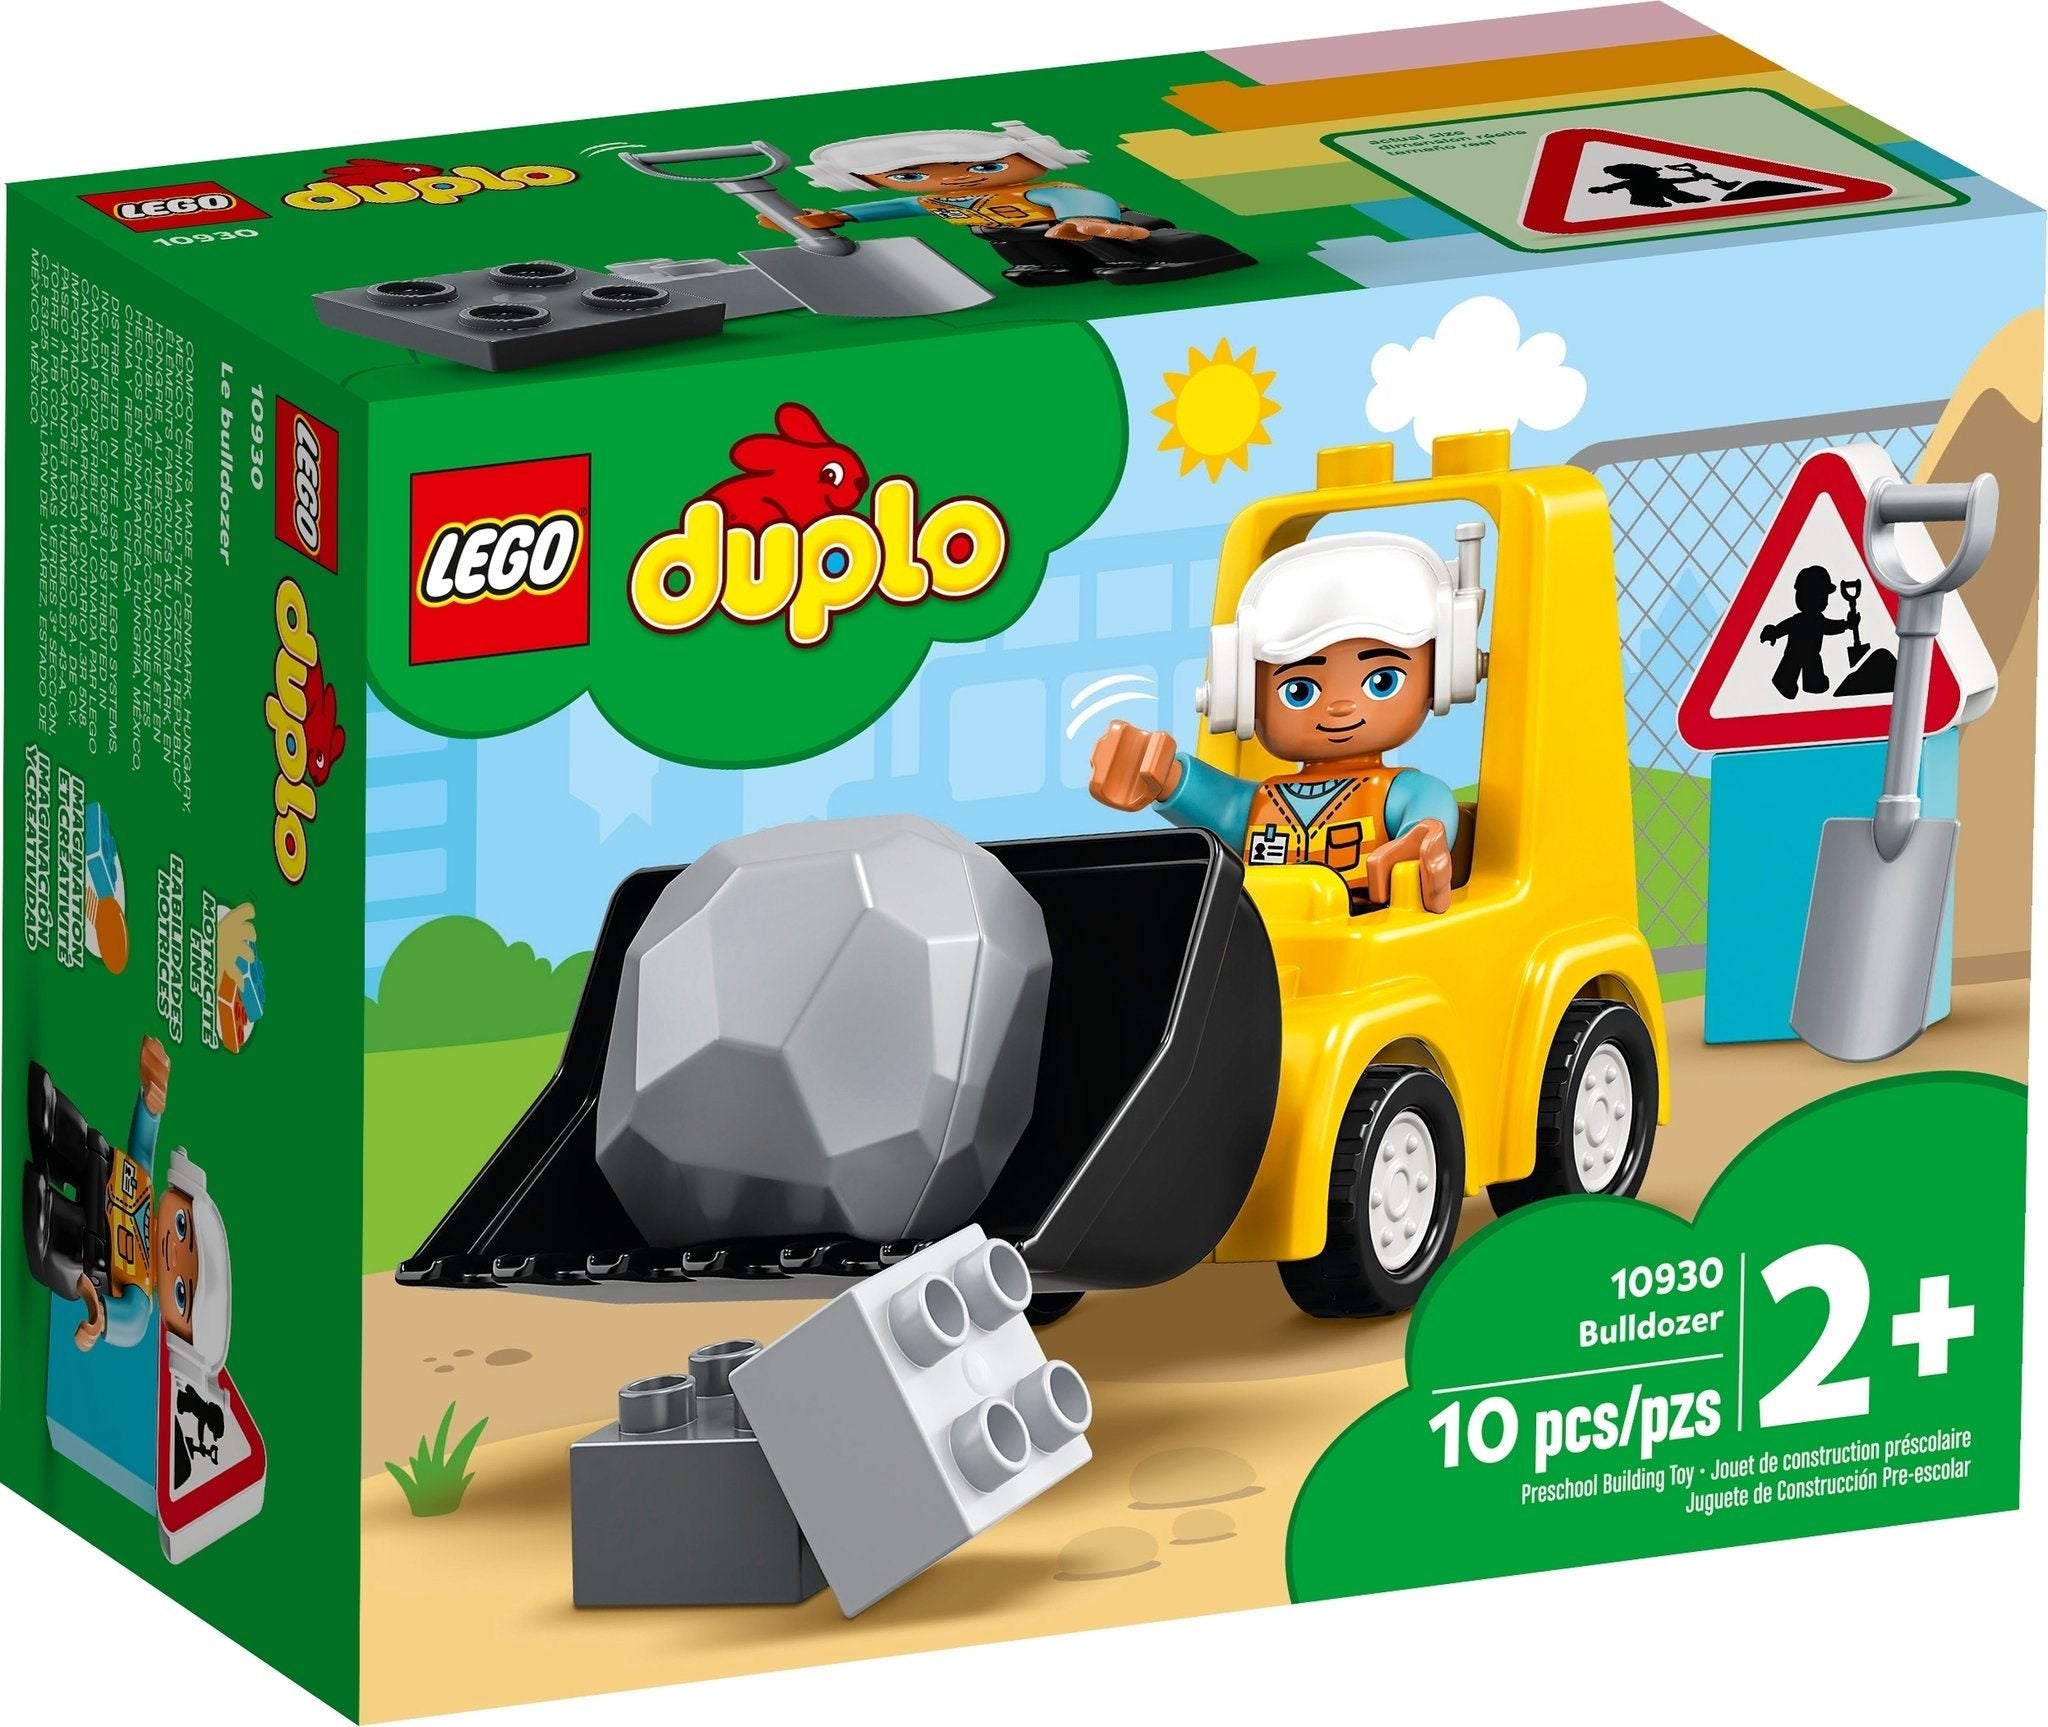 Lego 10930 Bulldozer - LEGO